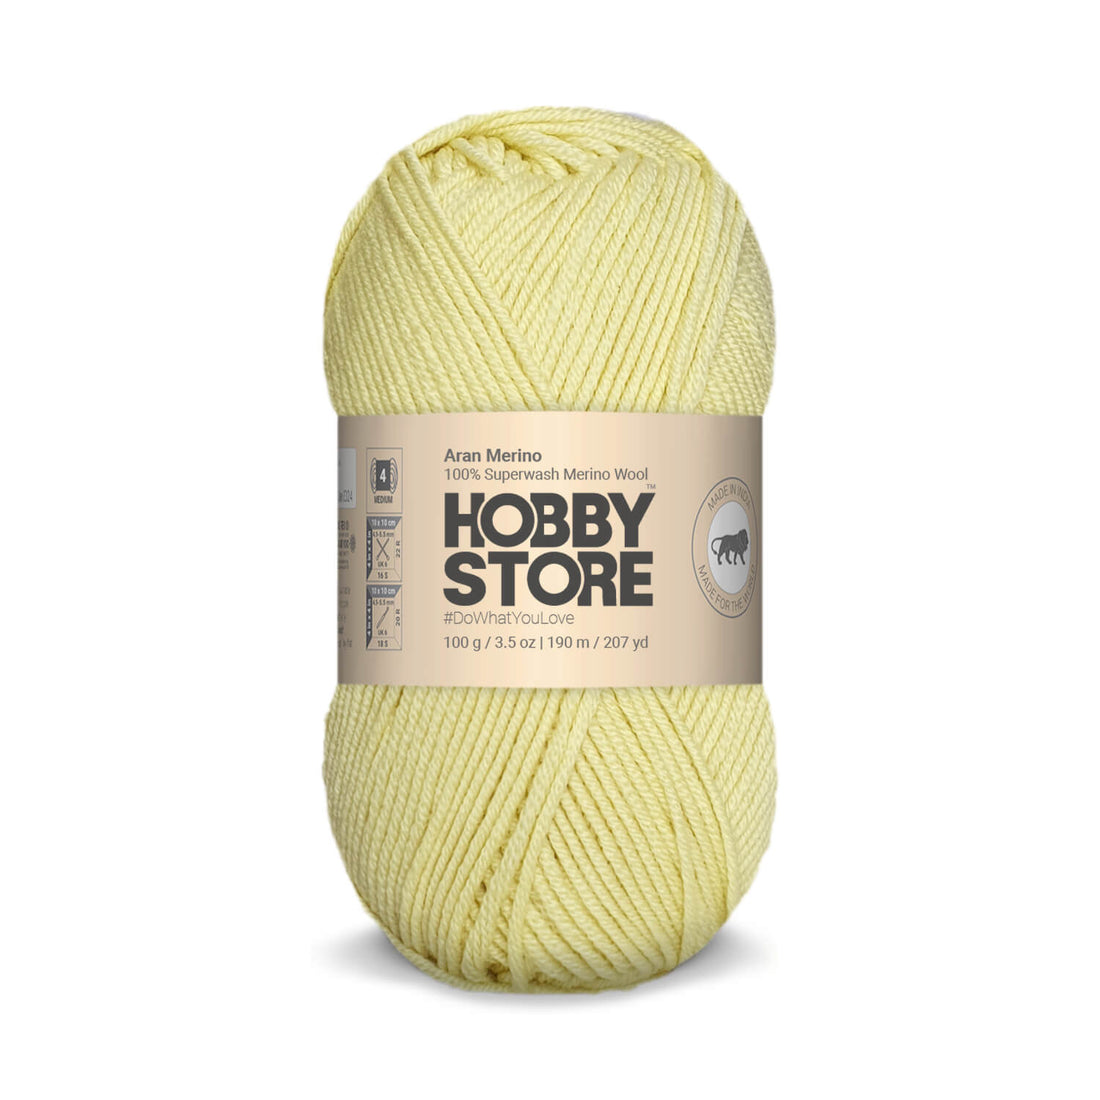 Aran Merino Wool by Hobby Store - Lemonade AM025